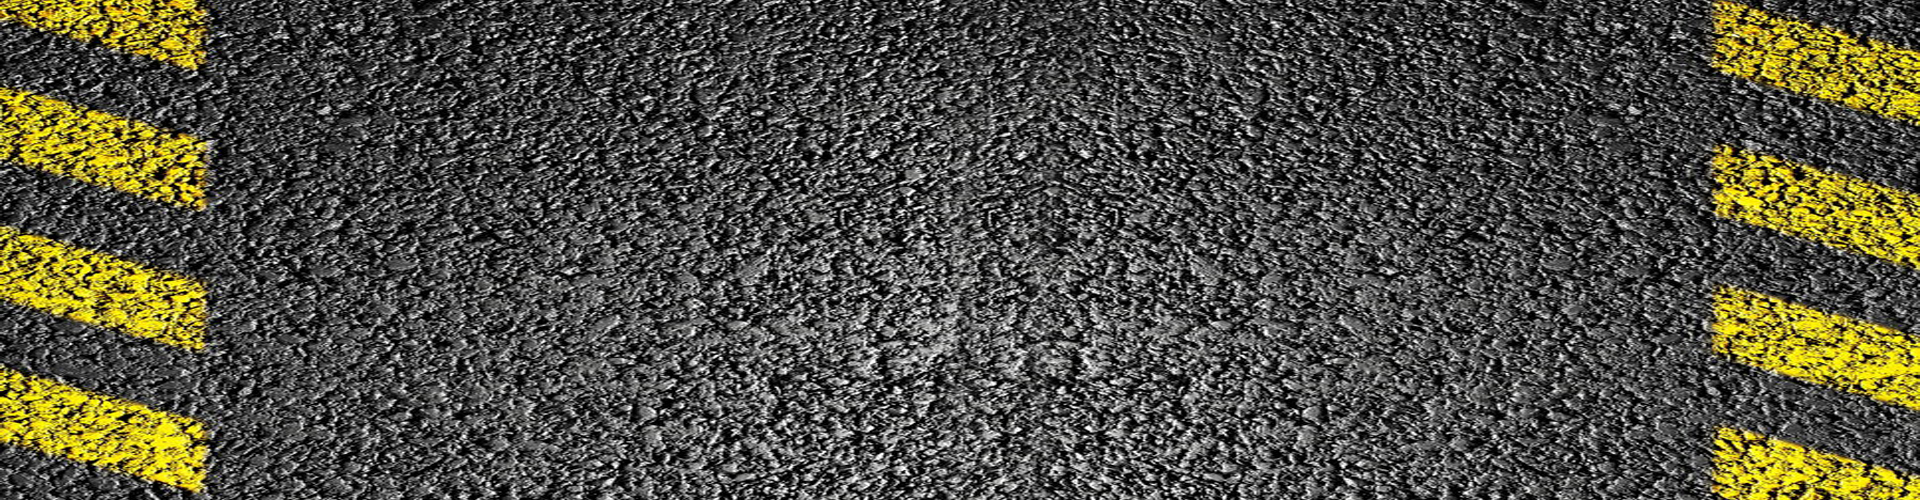 asfalt 1920x500kopie